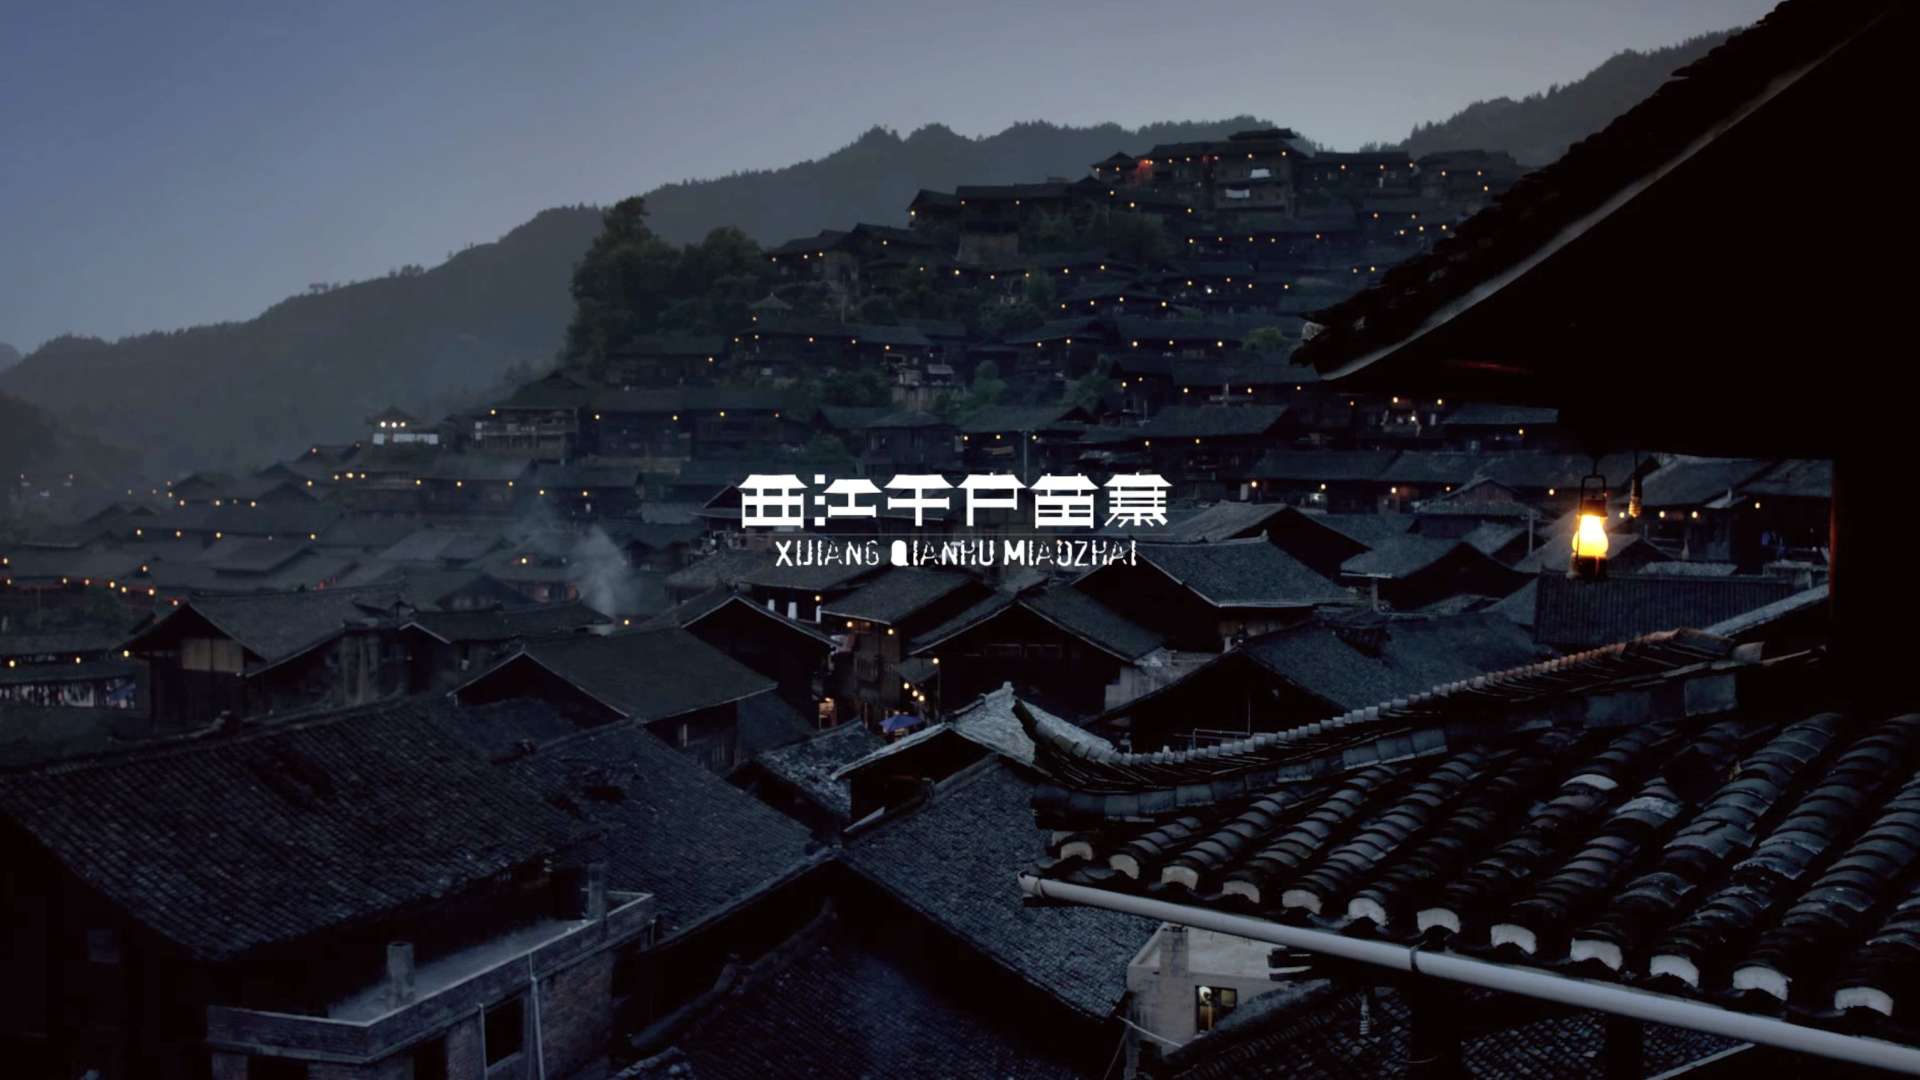 The QianHu Miao Village千户苗寨